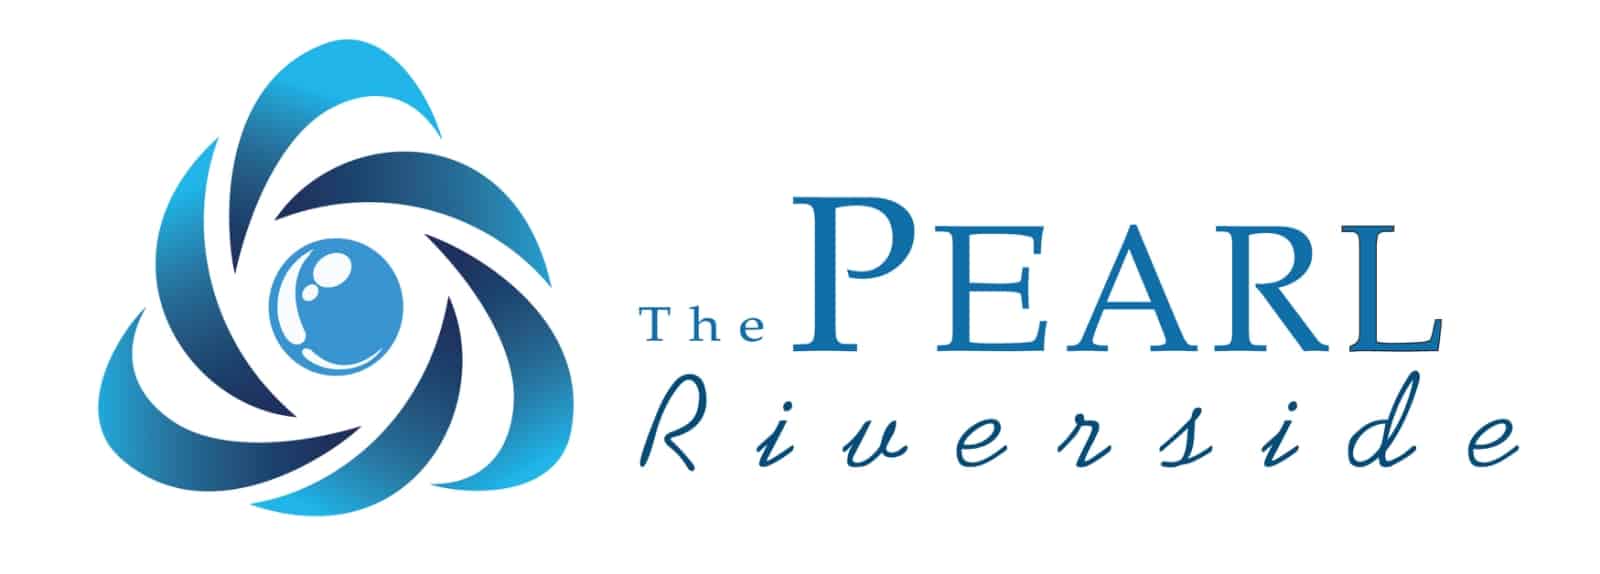 logo the pearl riverside